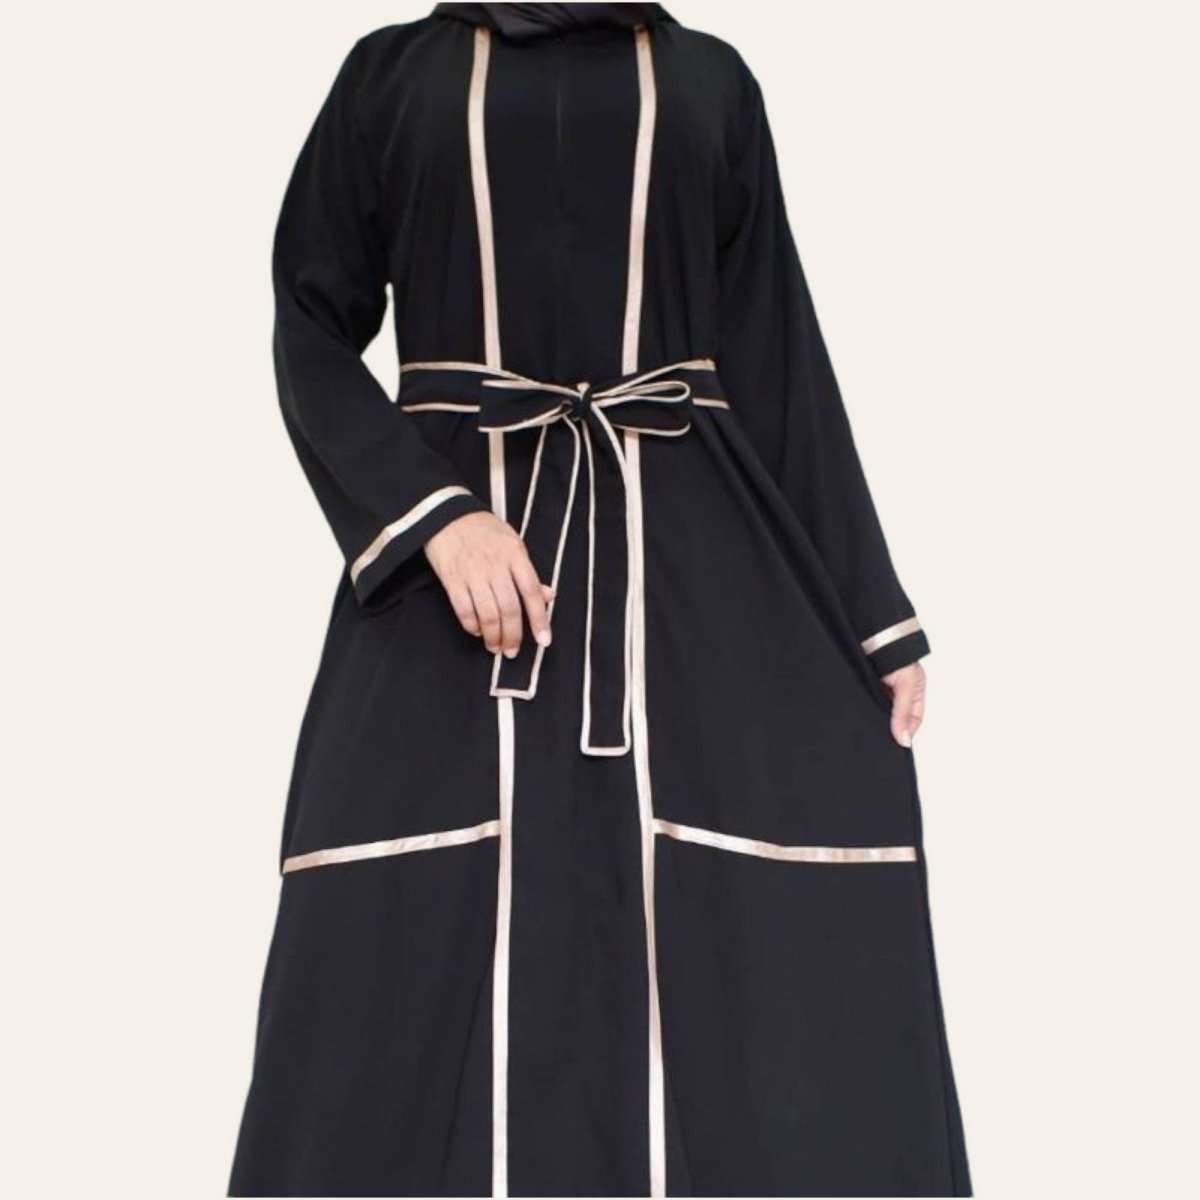 Ribbon Black Abaya for Women Modest Muslim Dress - Zhaviah